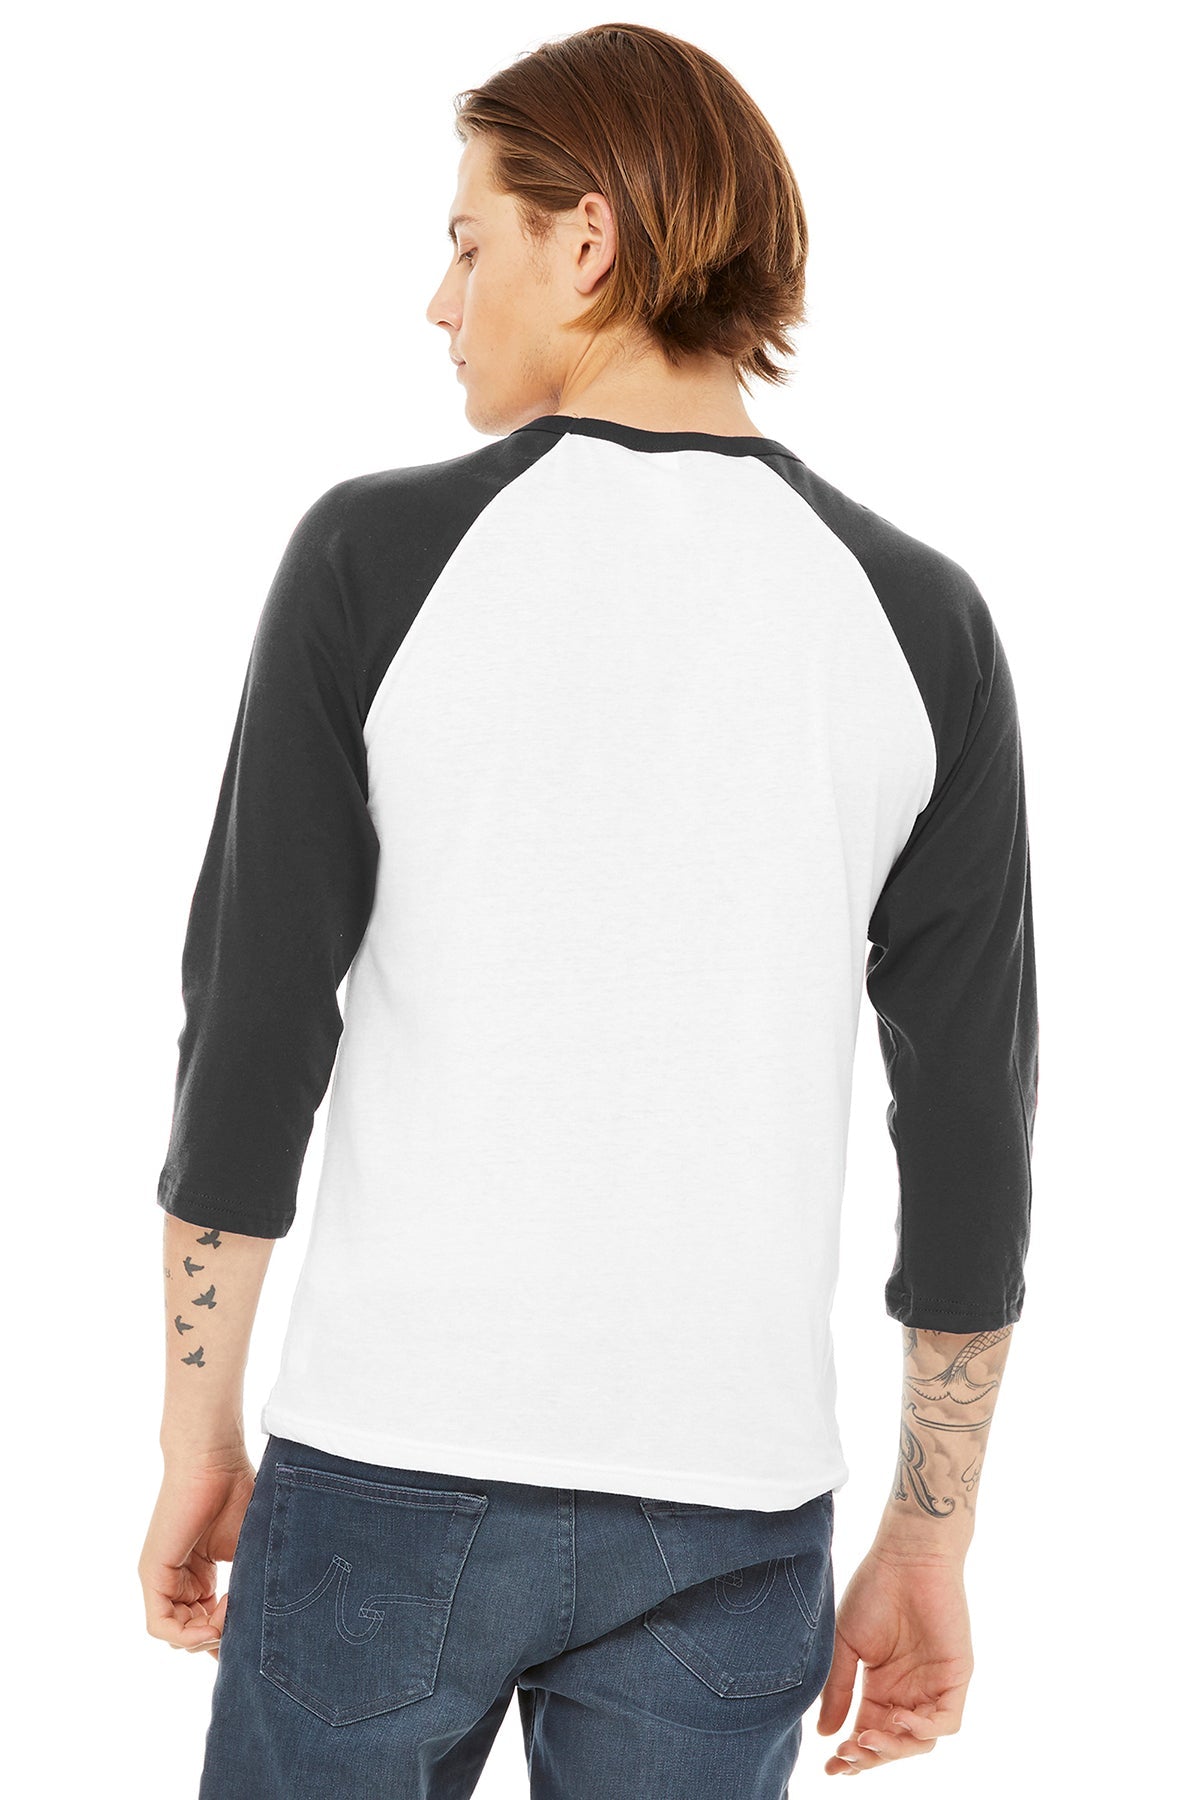 bella + canvas unisex 3/4-sleeve baseball t-shirt 3200 white/ asphalt